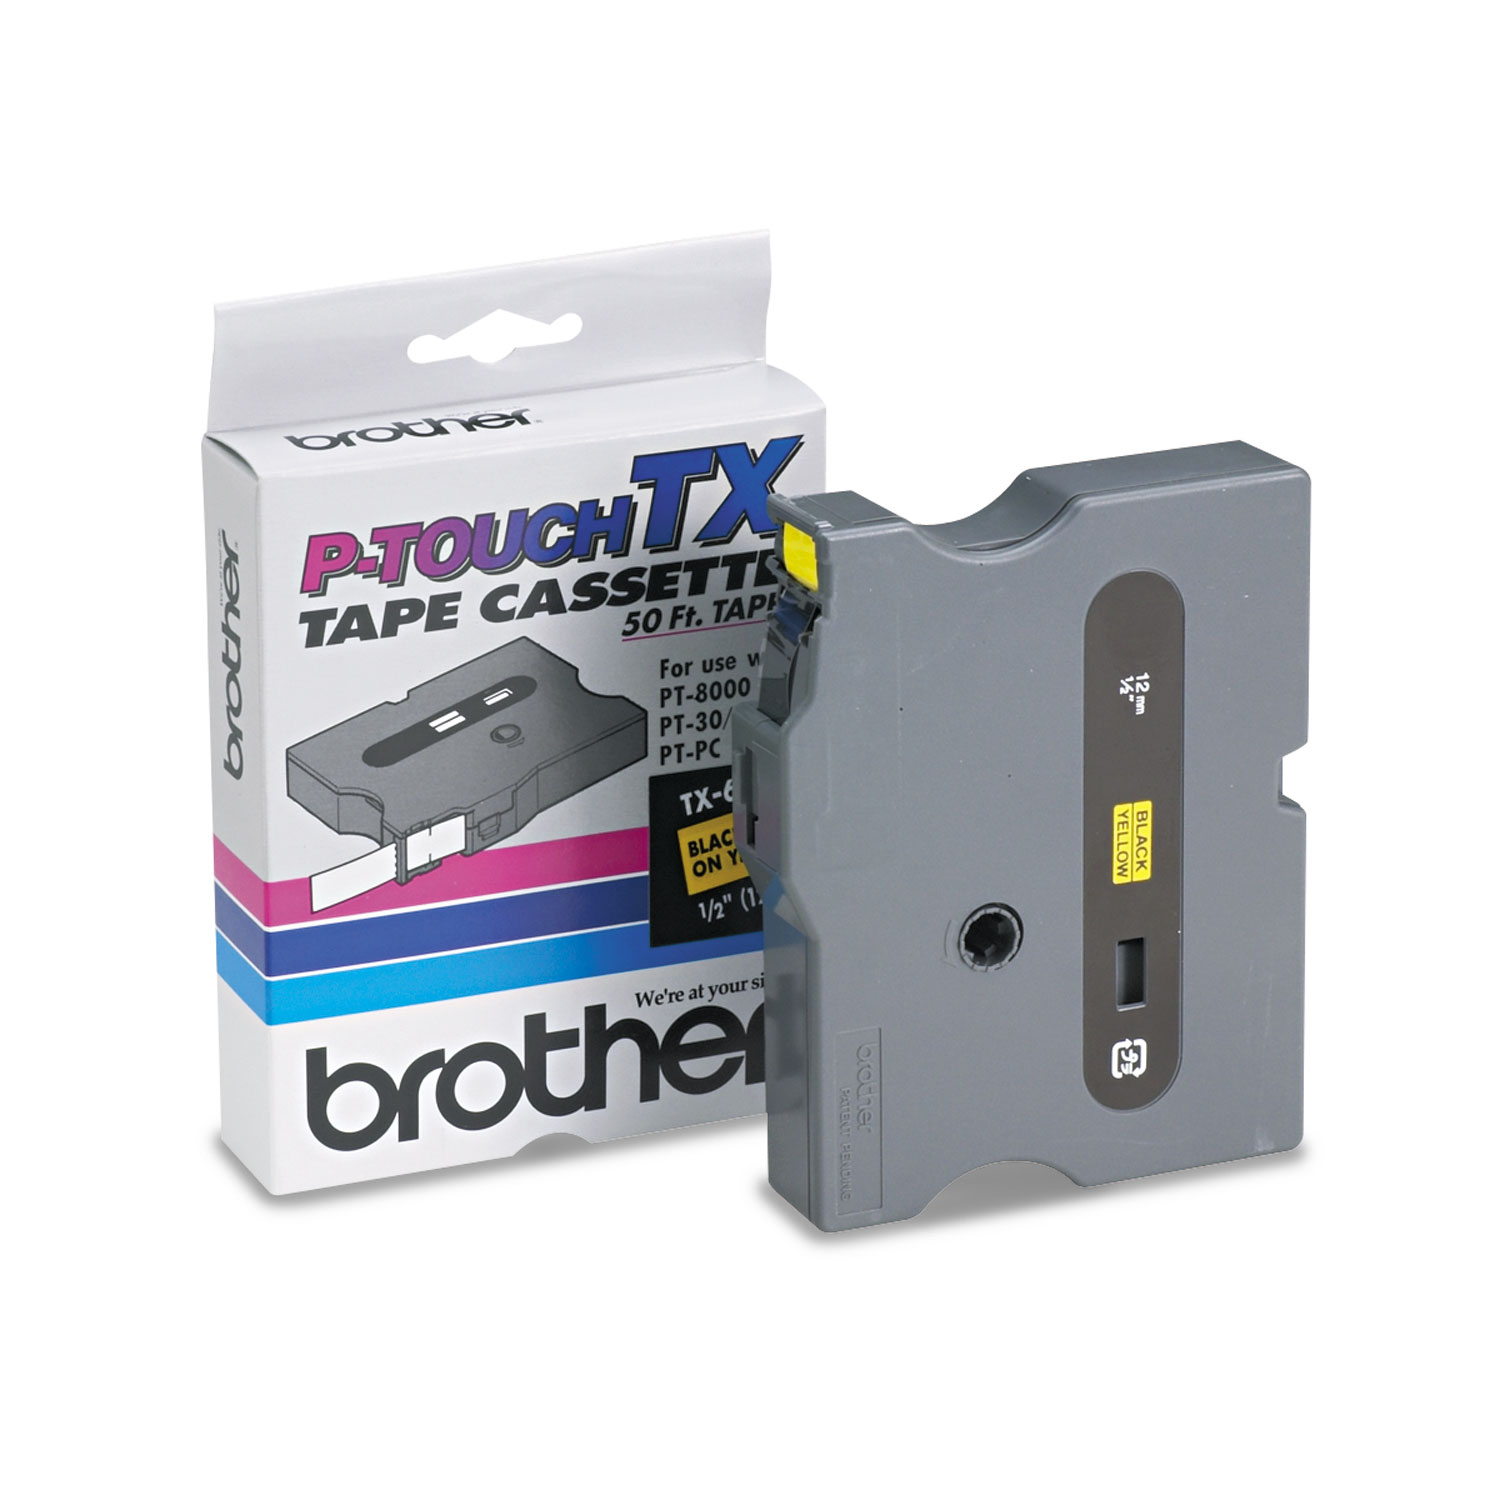 TX Tape Cartridge for PT-8000, PT-PC, PT-30/35, 1/2w, Black on Yellow